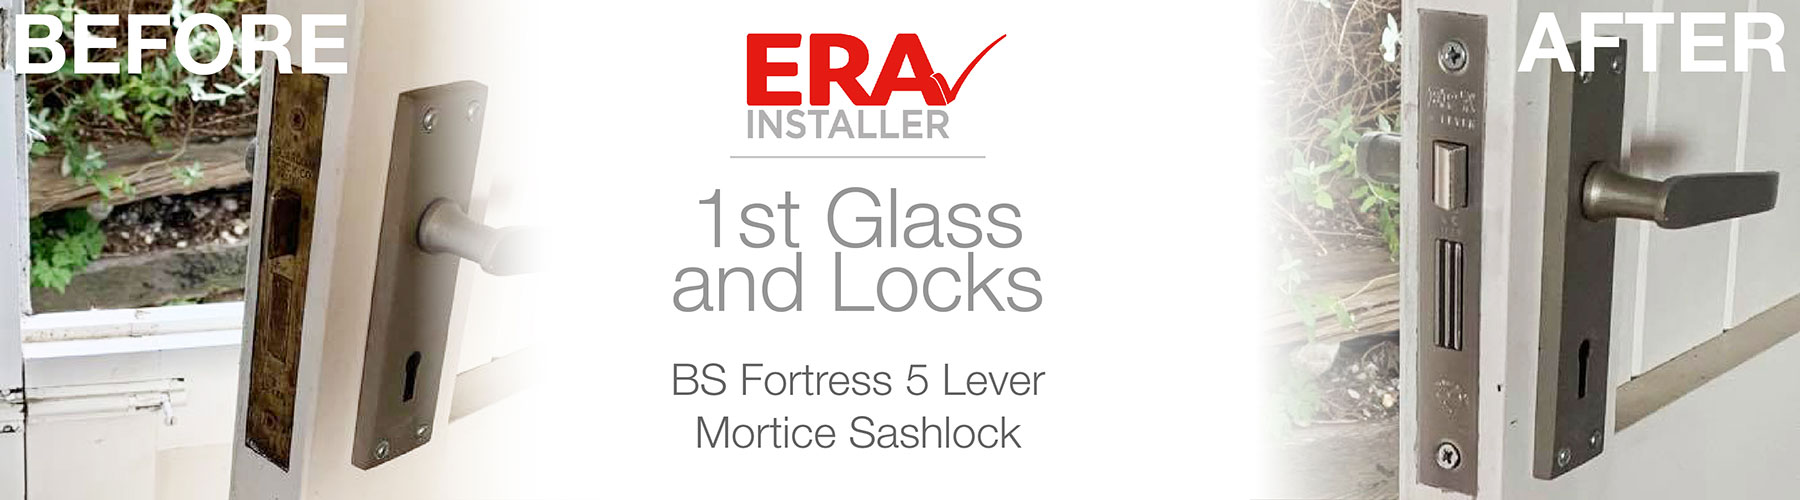 ERA Installer Testimonial 1st glass and locks fortress